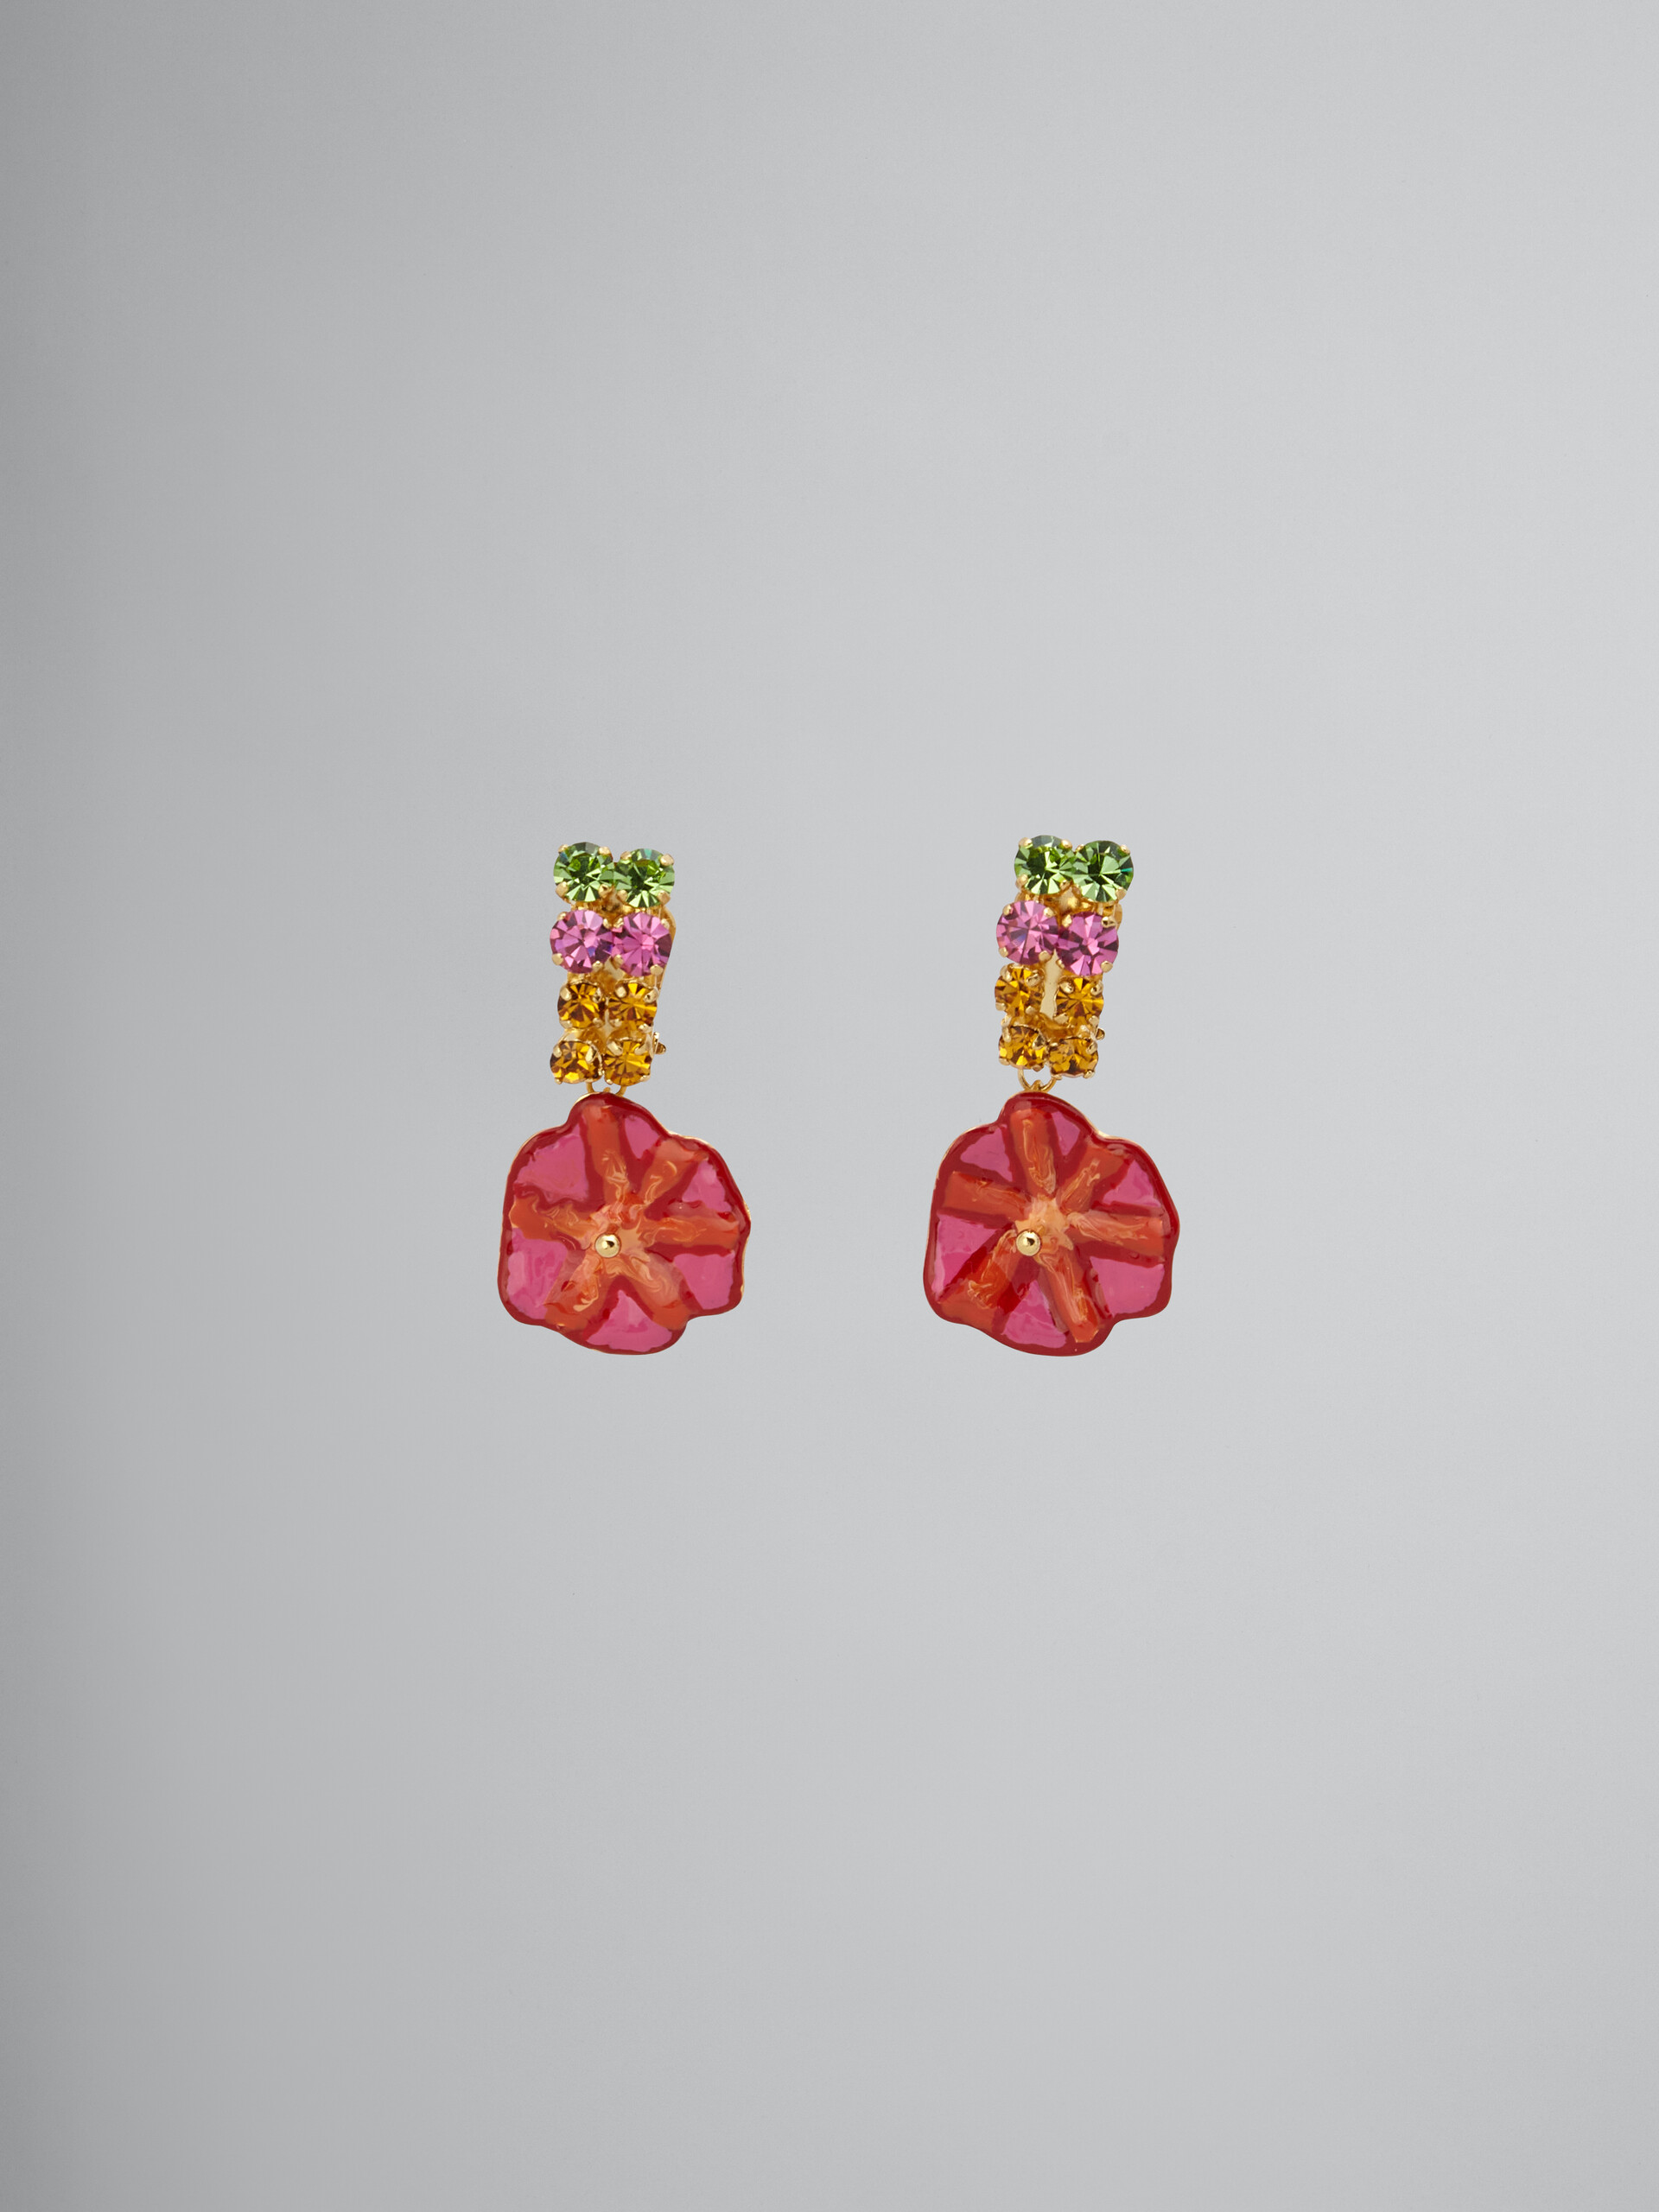 Brass and rhinestone FLORA earrings - Earrings - Image 1